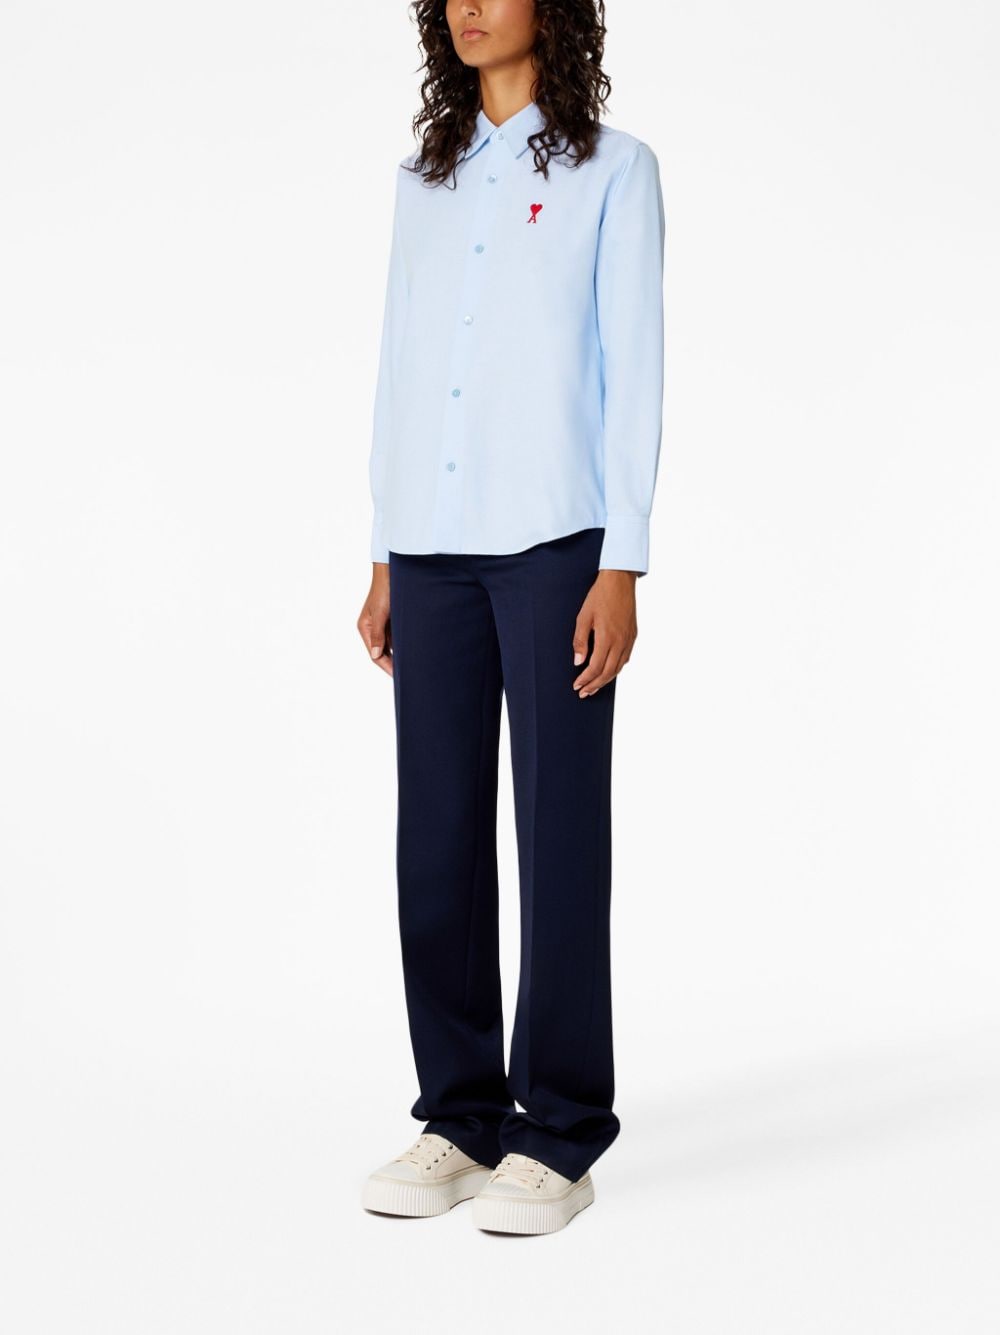 Polo Ralph Lauren CUSTOM FIT OXFORD SHIRT - Shirt - blue - Zalando